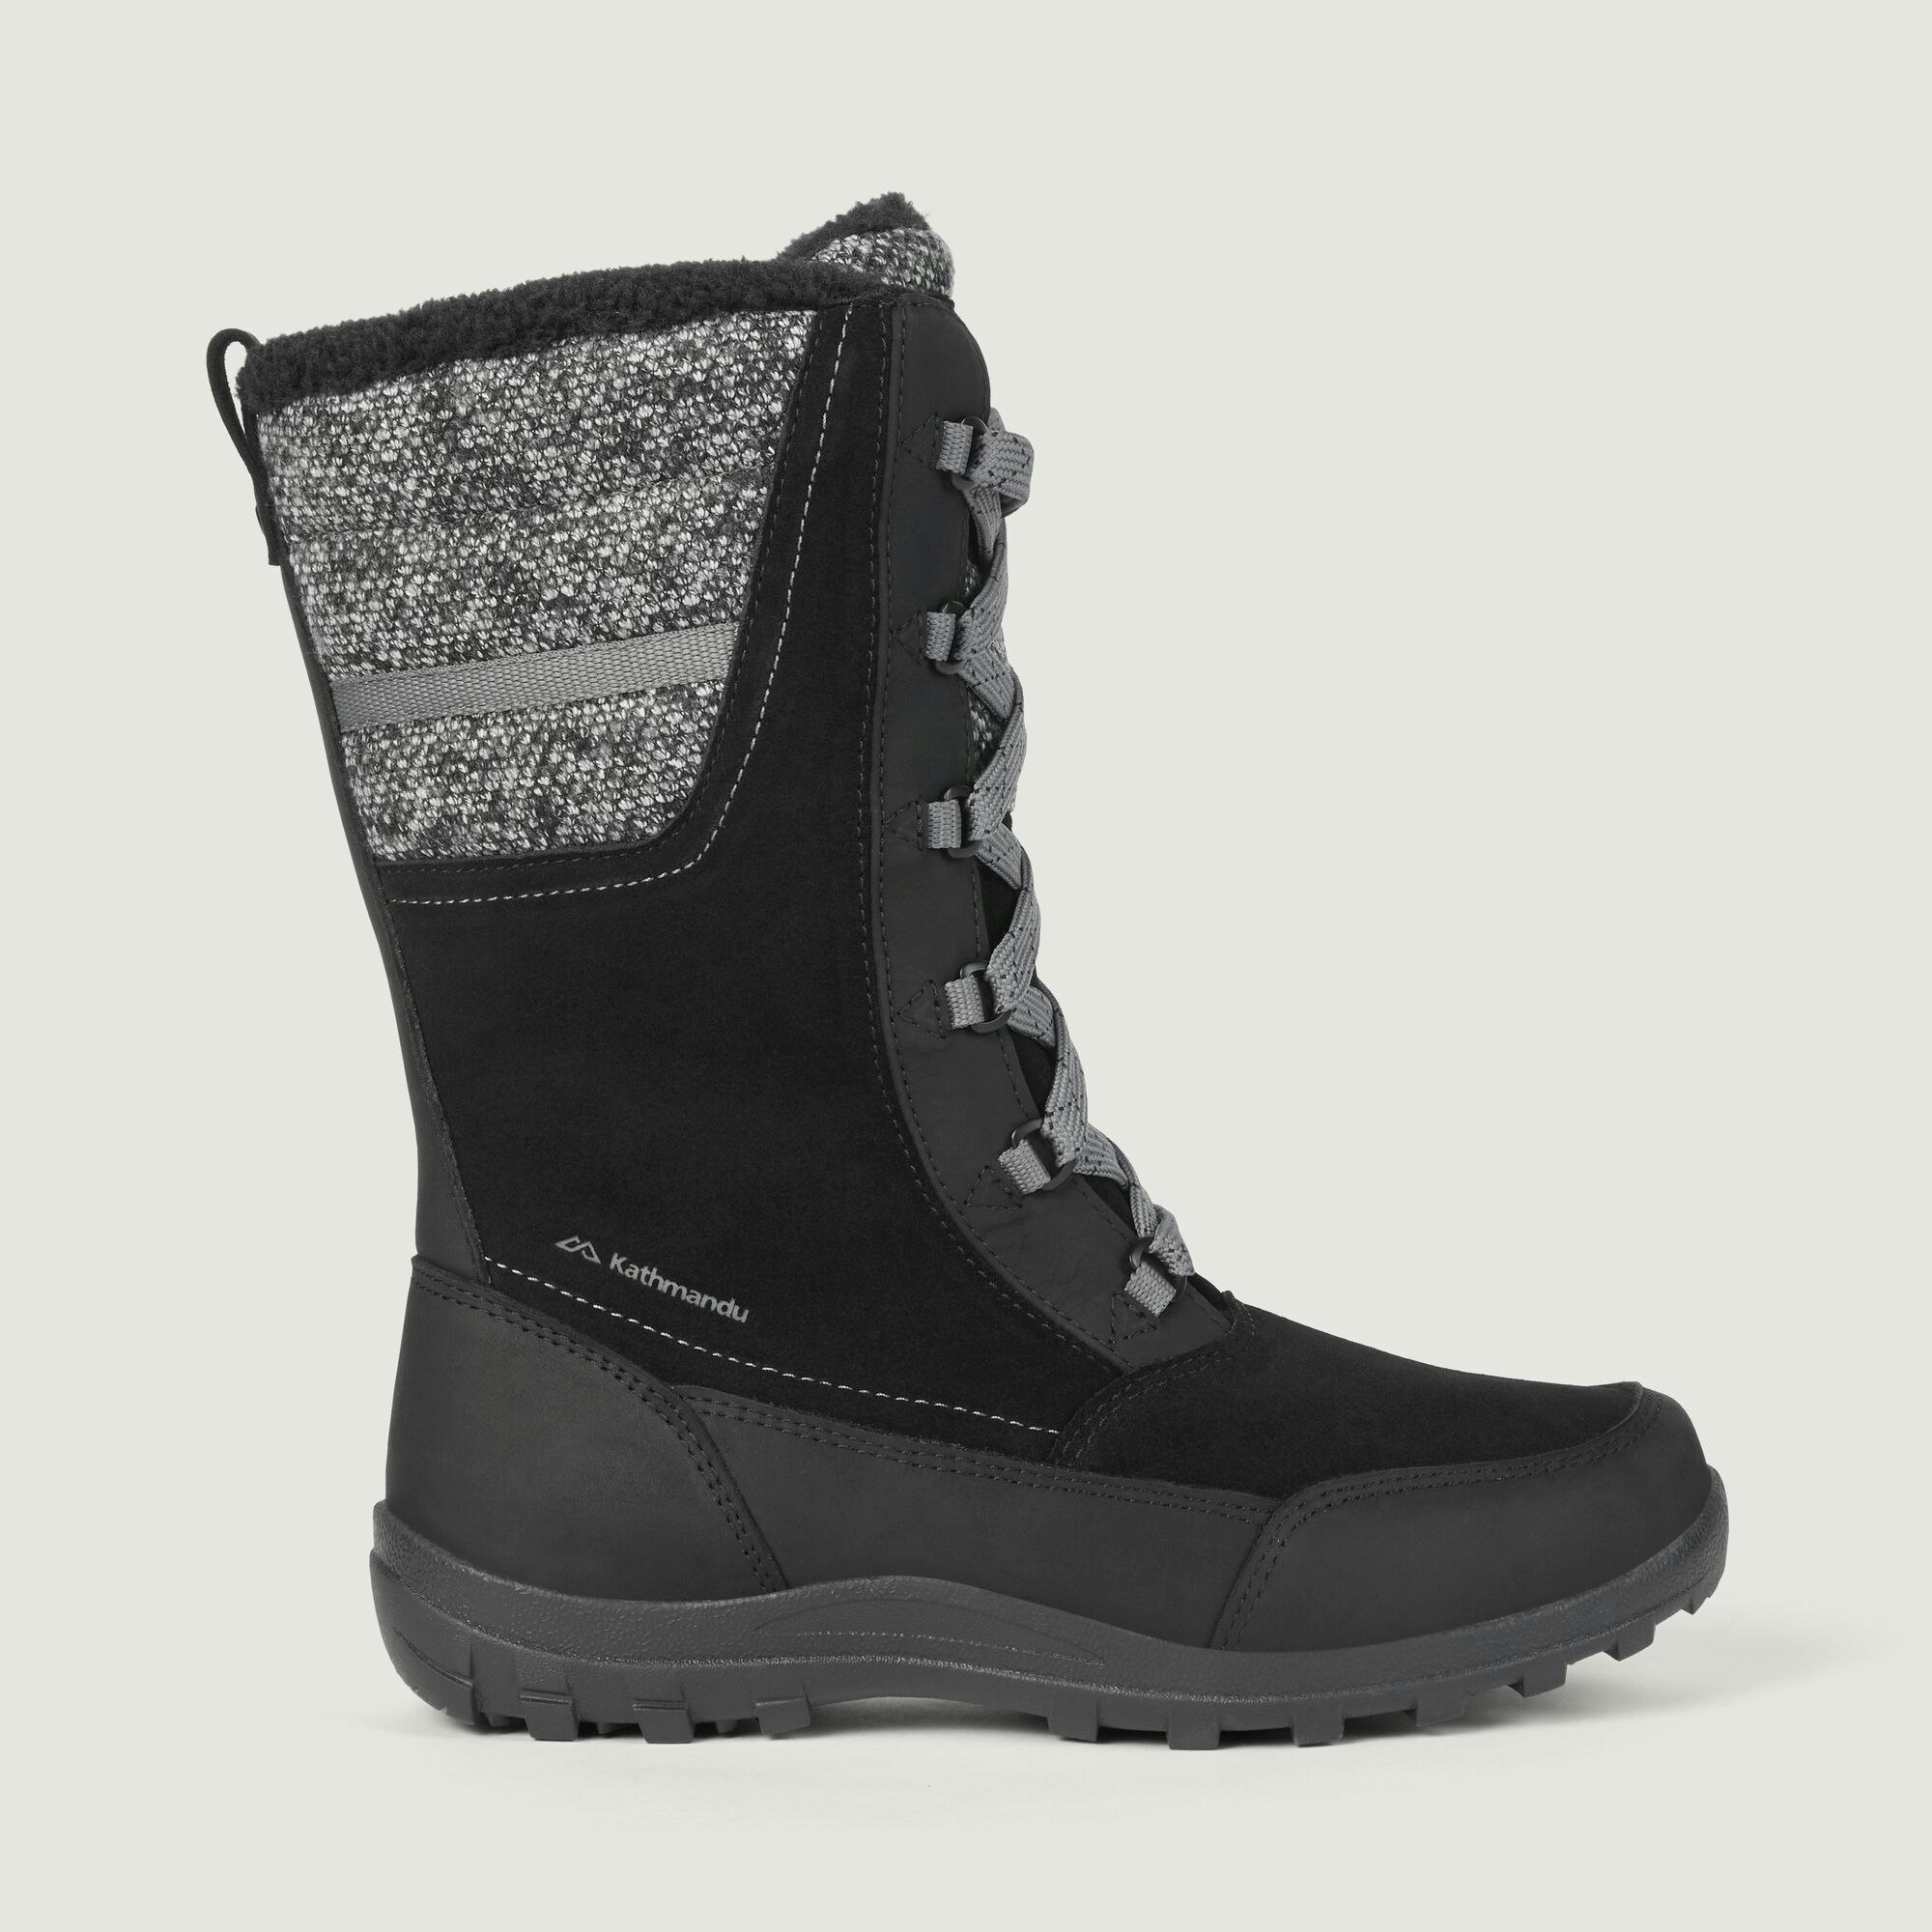 Buy Women's Snow Boots & Winter Boots